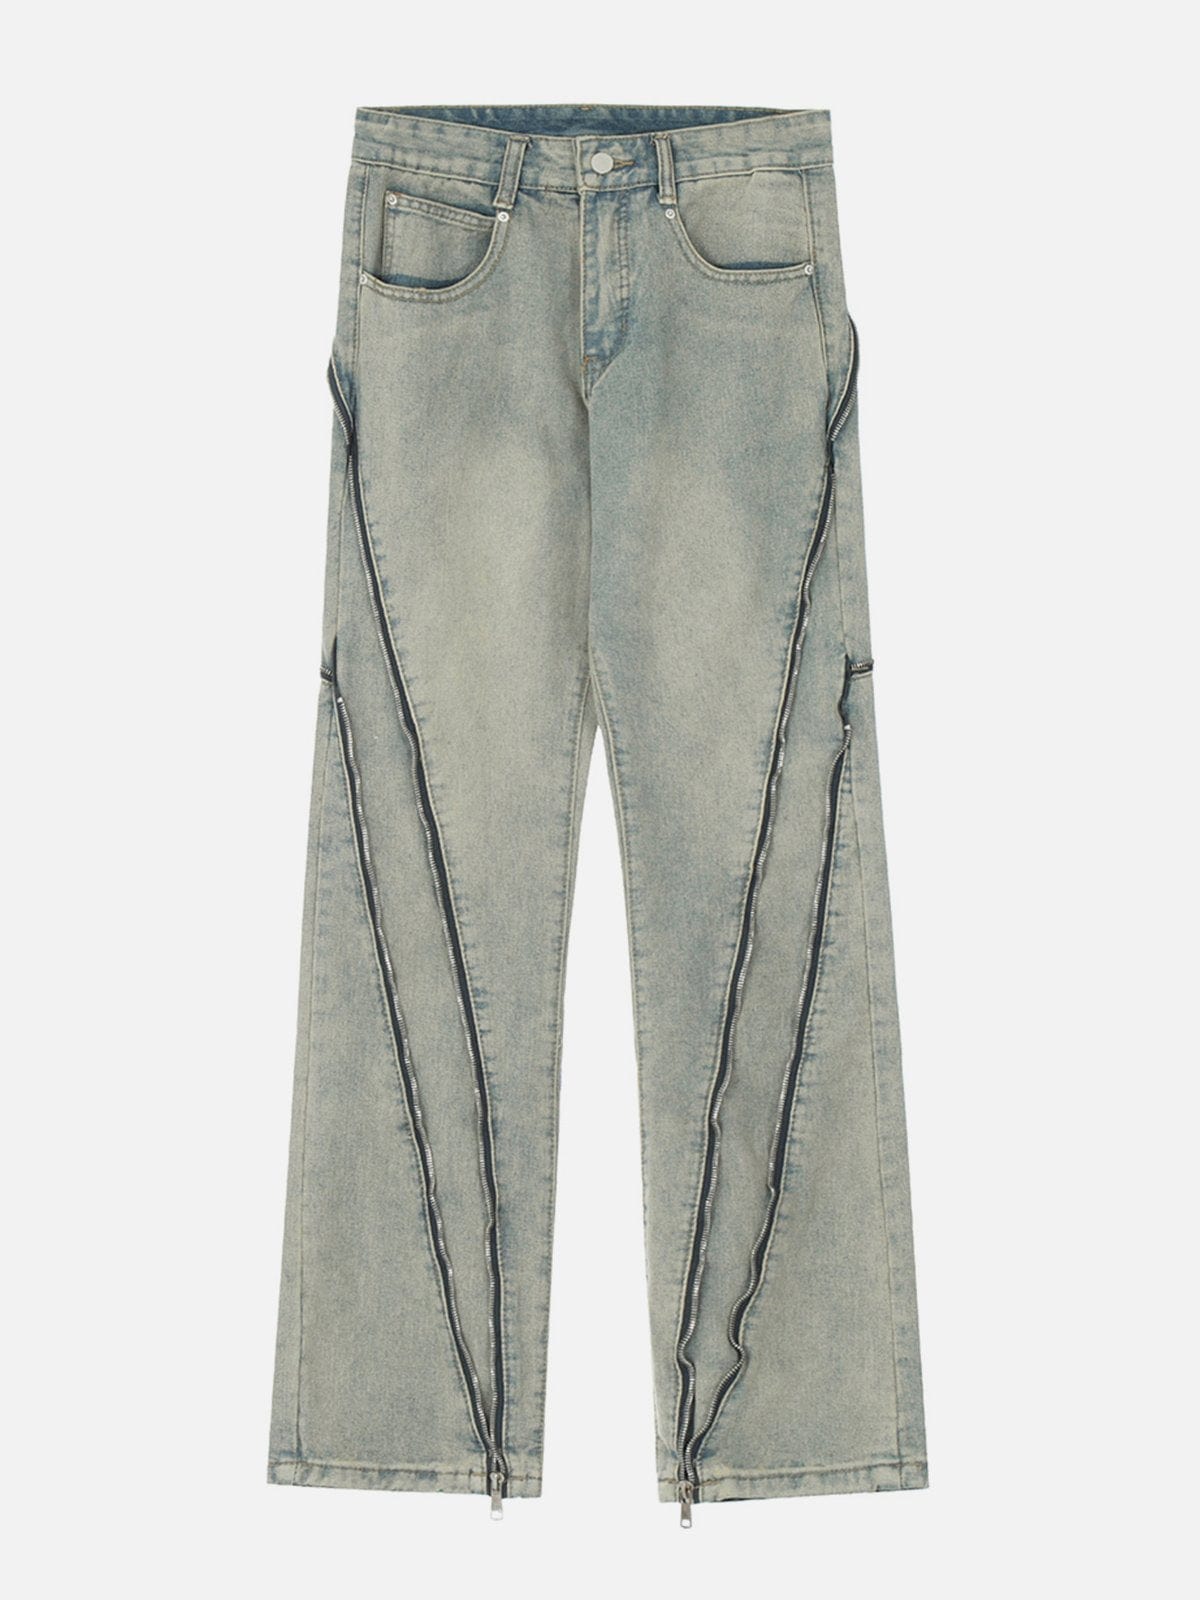 NEV Symmetrical Multi-Zip Deconstructed Jeans